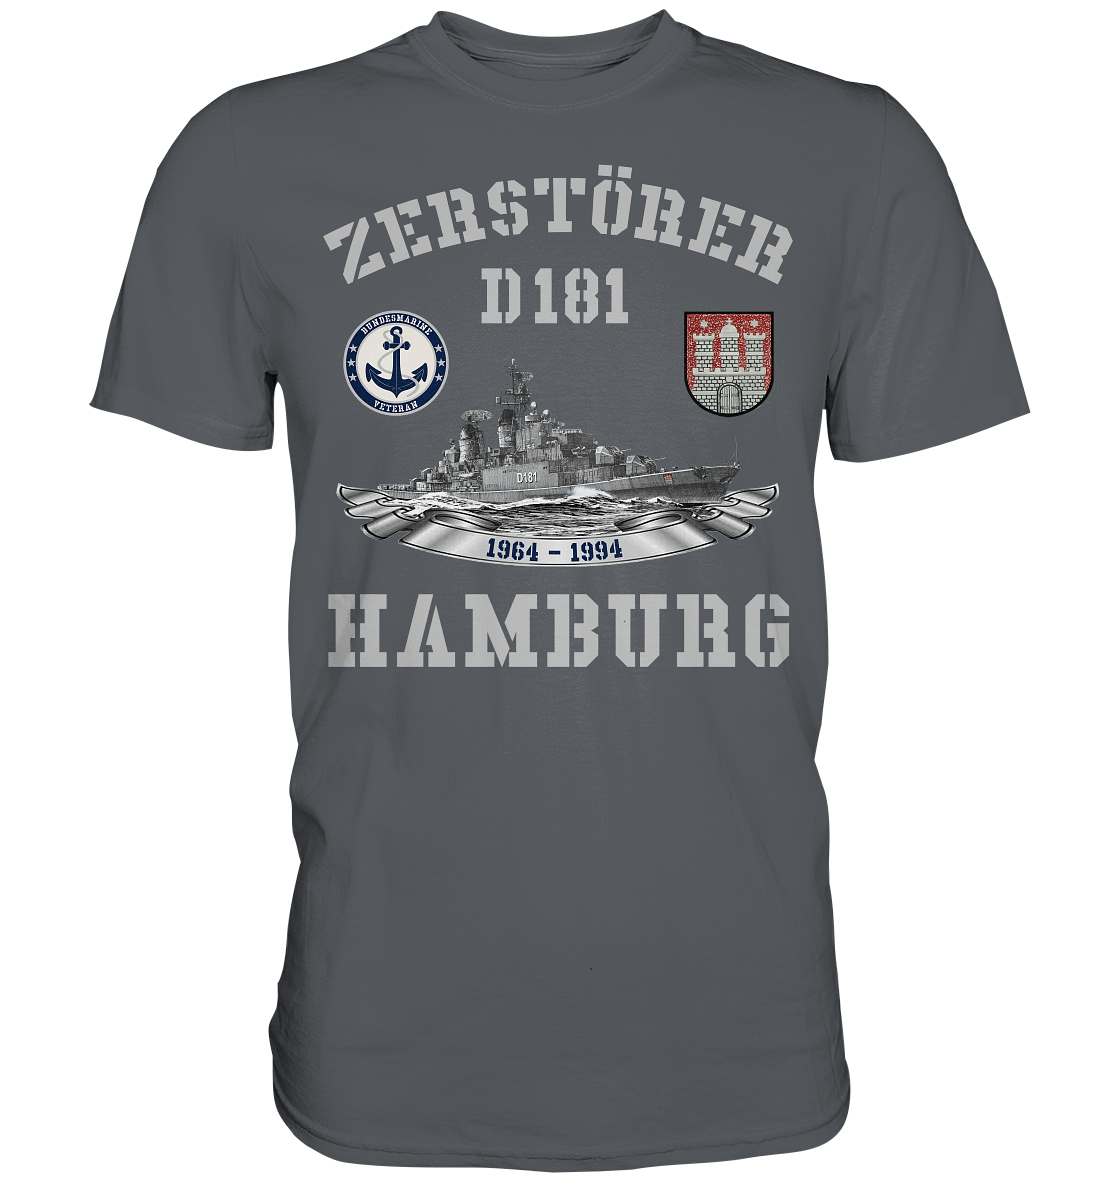 Zerstörer D181 HAMBURG Bundesmarine Veteran - Premium Shirt